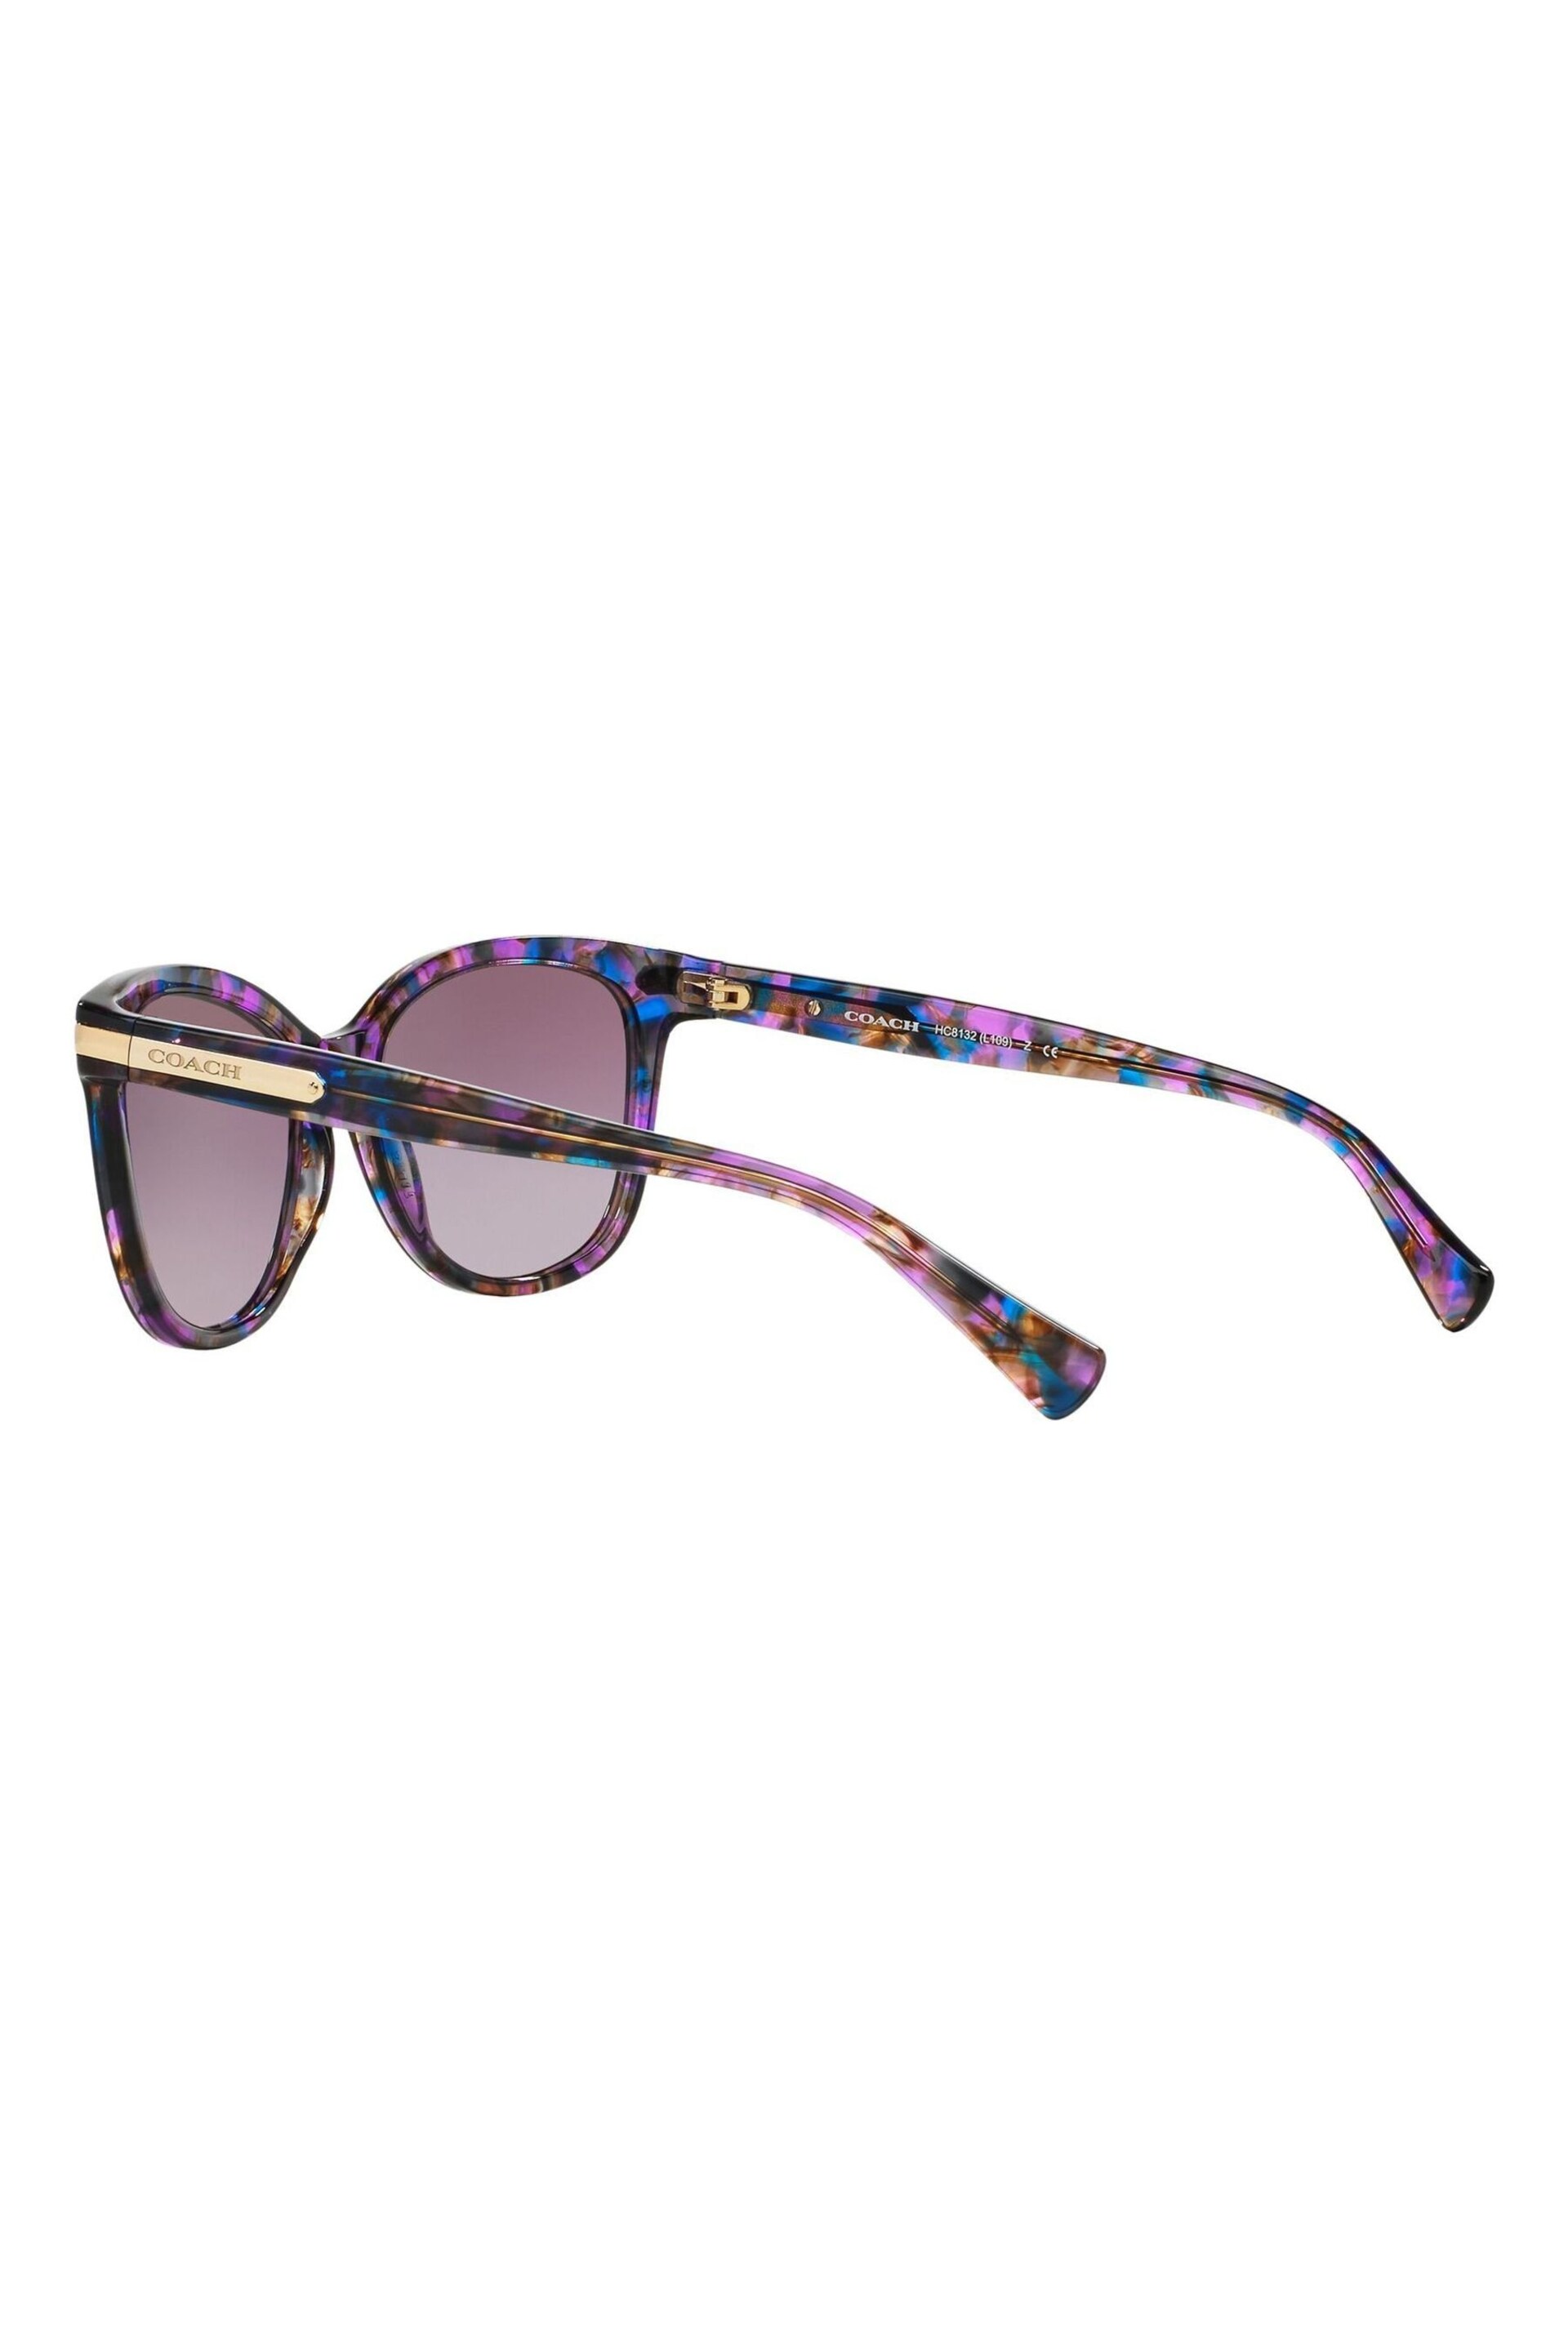 COACH Purple Sunglasses - Image 10 of 12